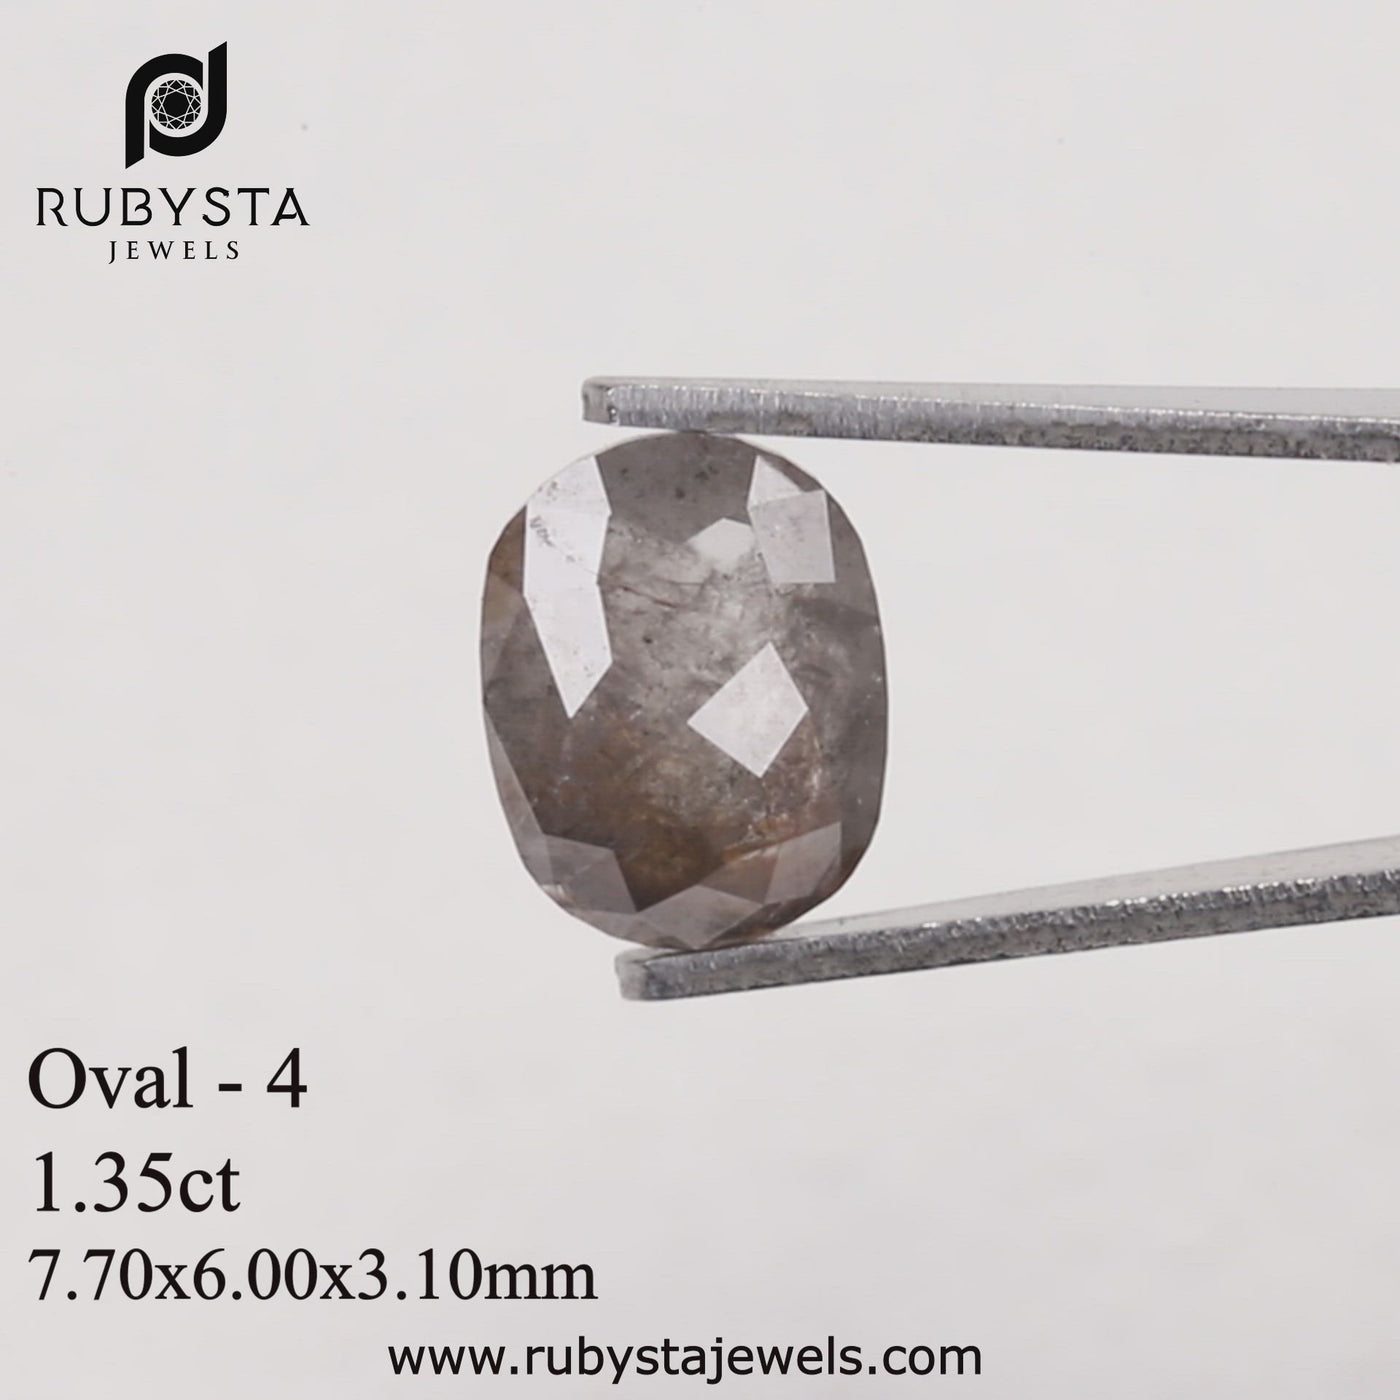 O4 - Salt and pepper oval diamond